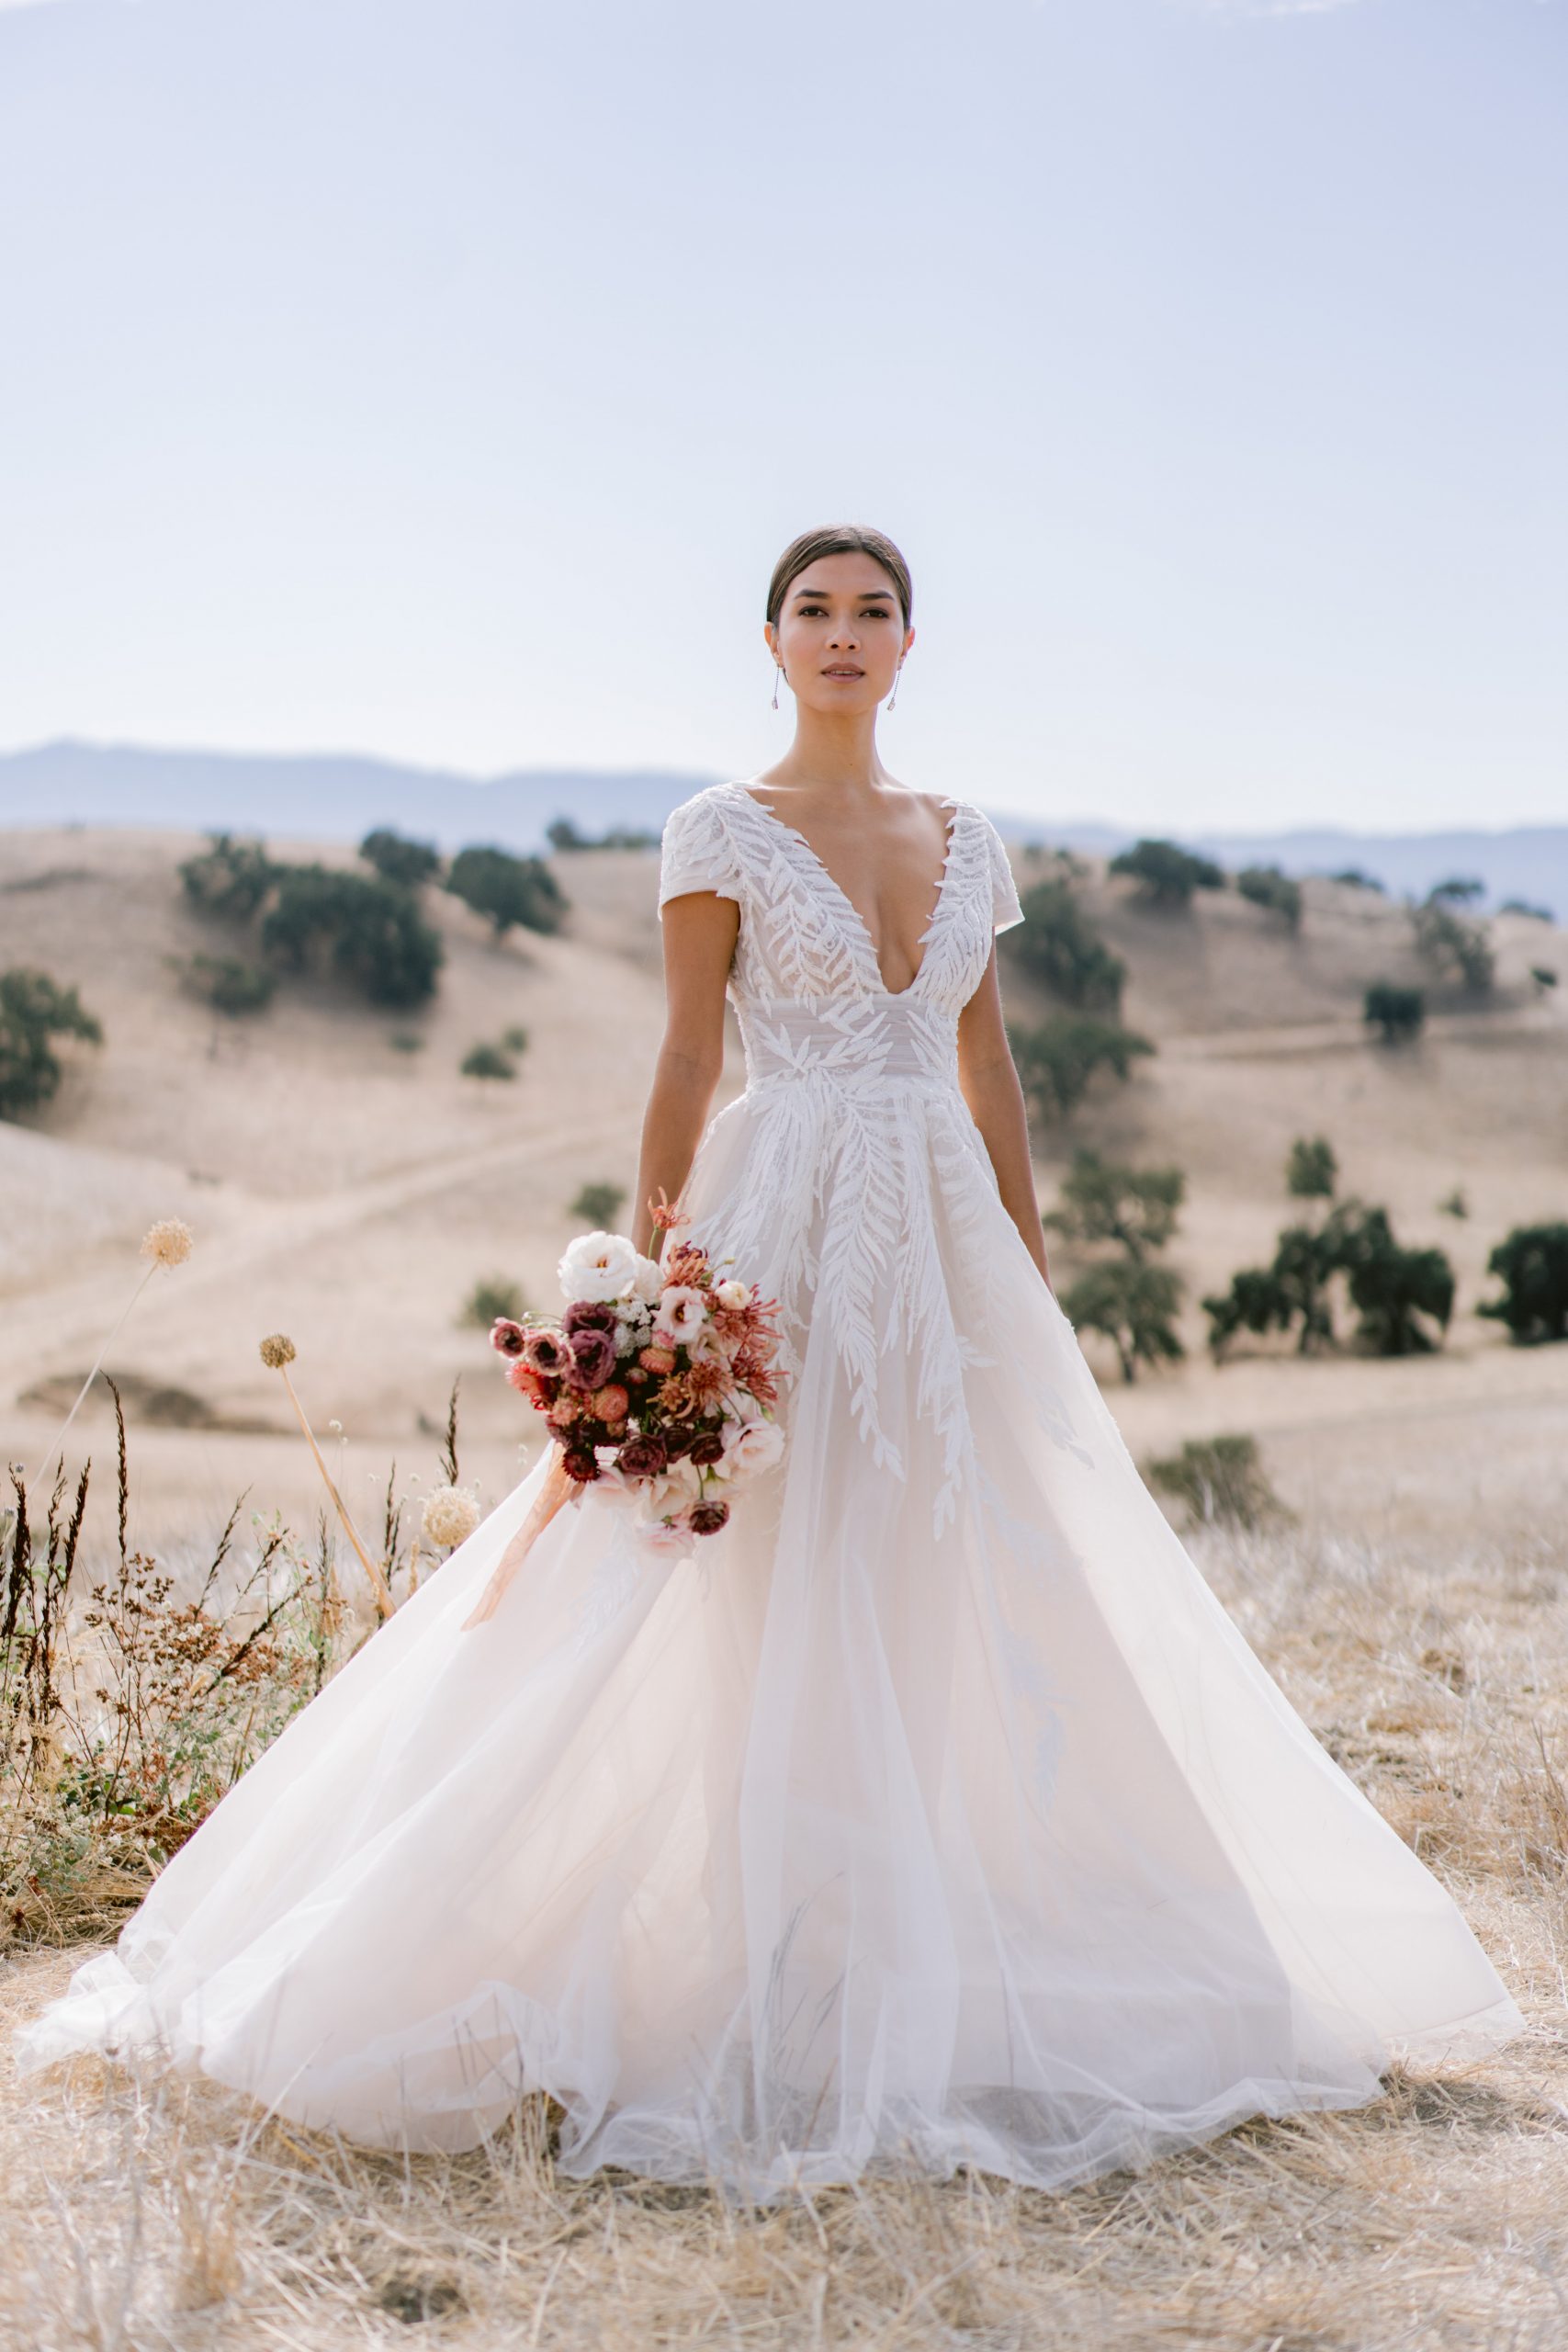 Wedding Dresses Small Bust - Shop on Pinterest